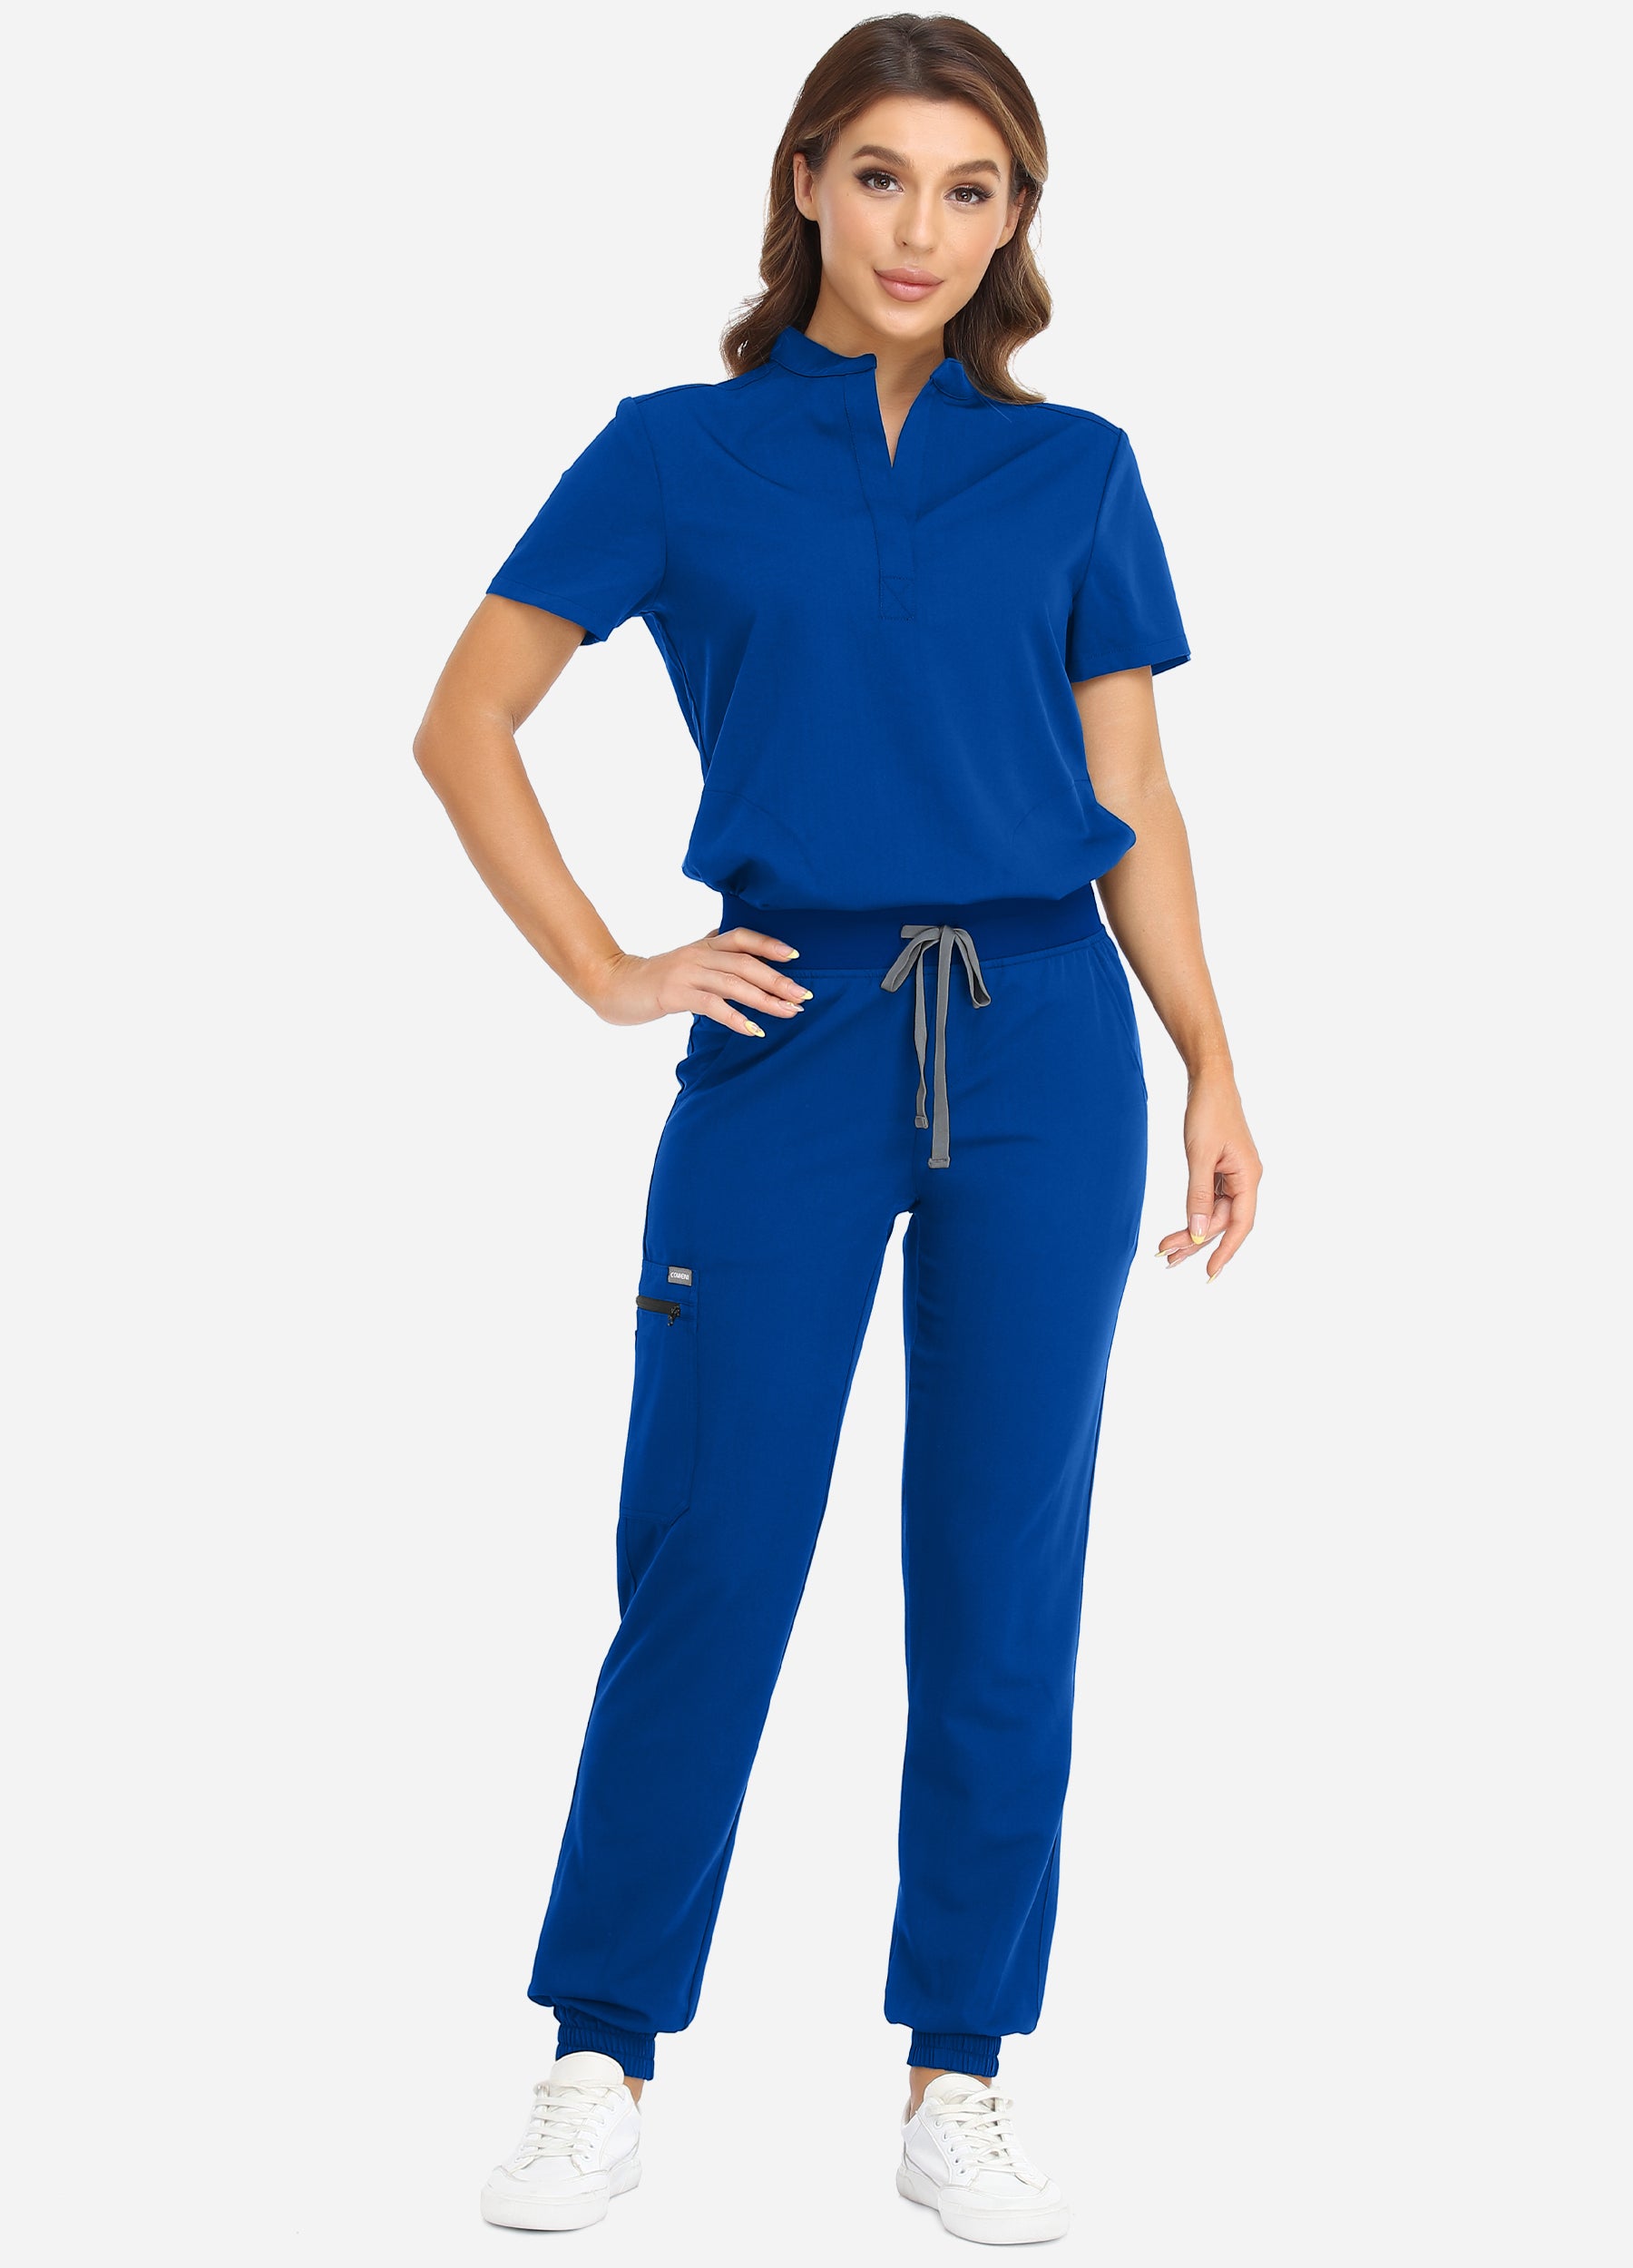 c-guard® Female's sky blue french jogger scrub suit_ s Pant, Shirt